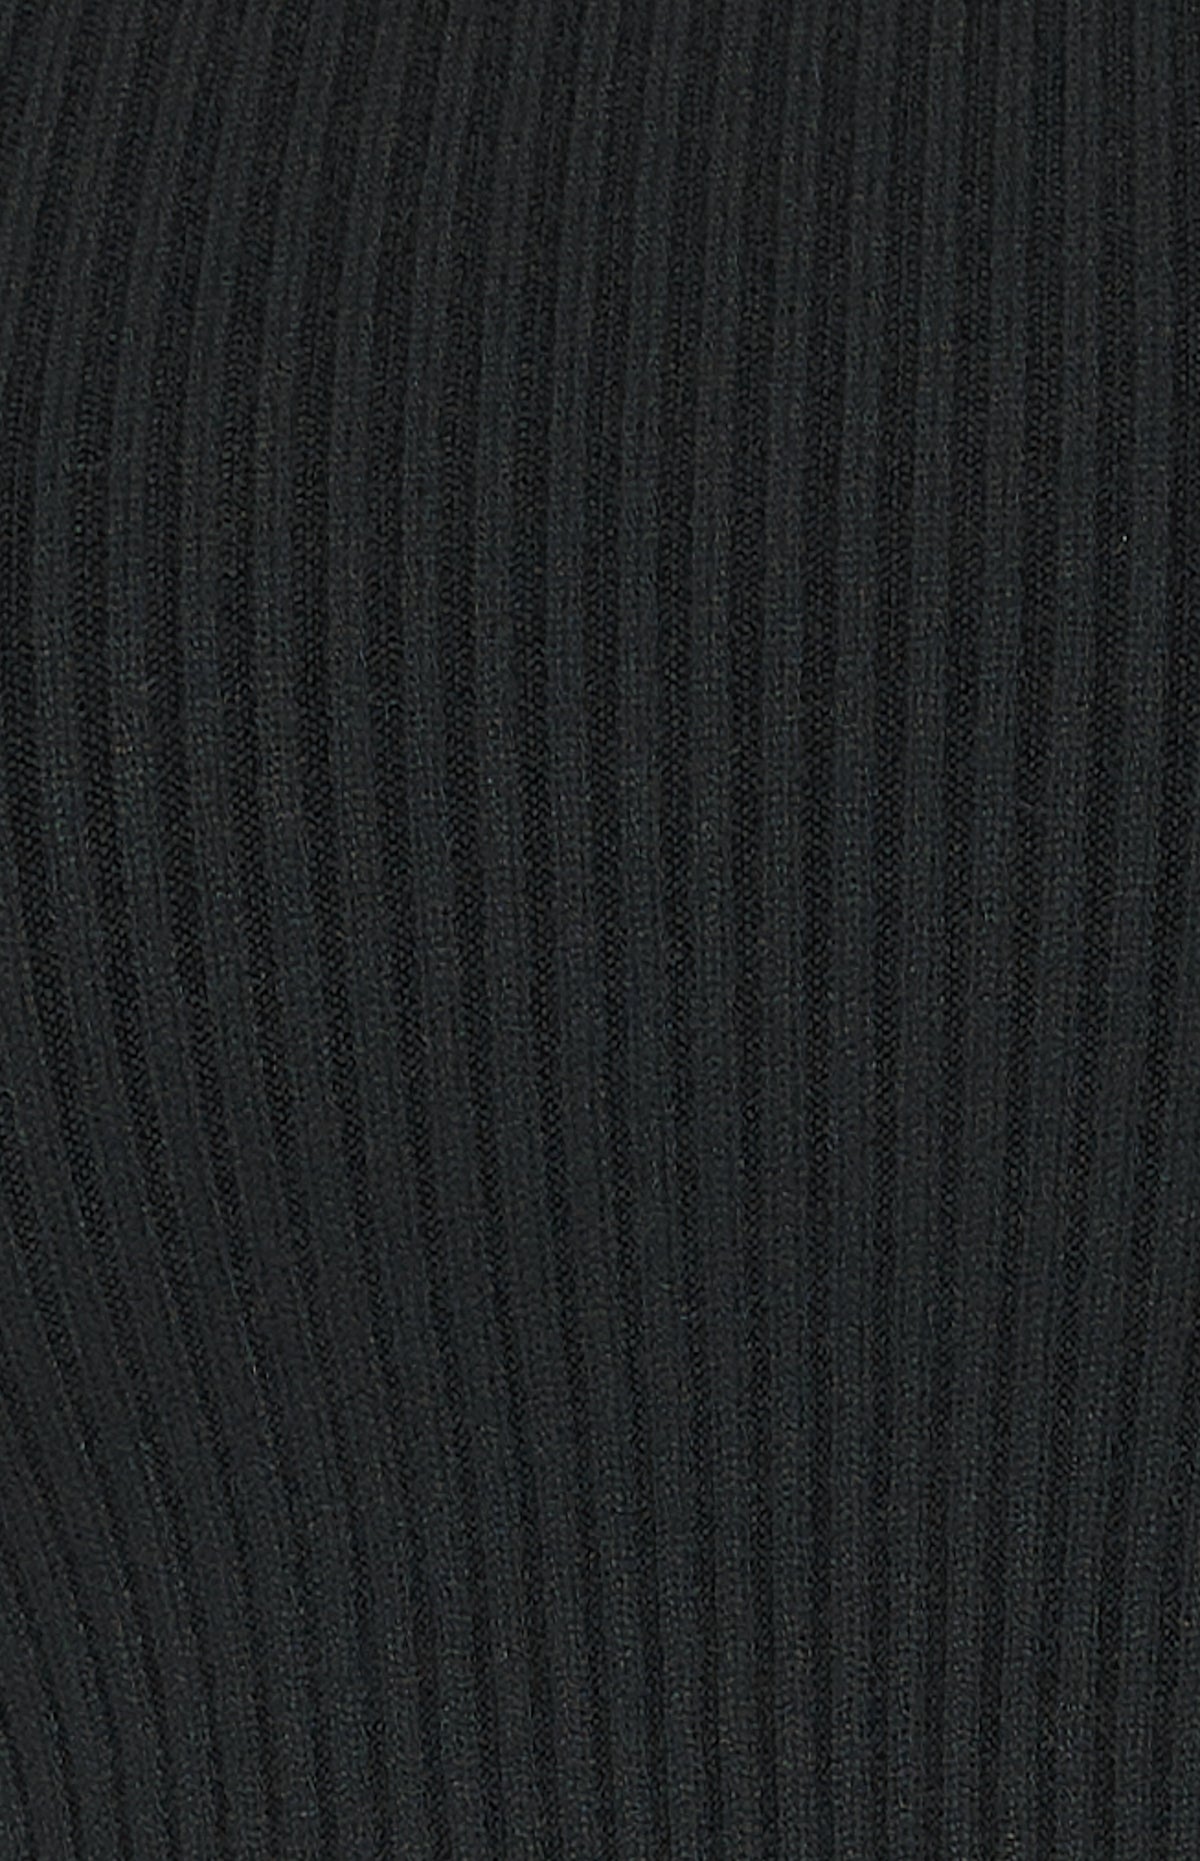 Yasmin Long Sleeve, Chain Neckline, Knit Top - Black